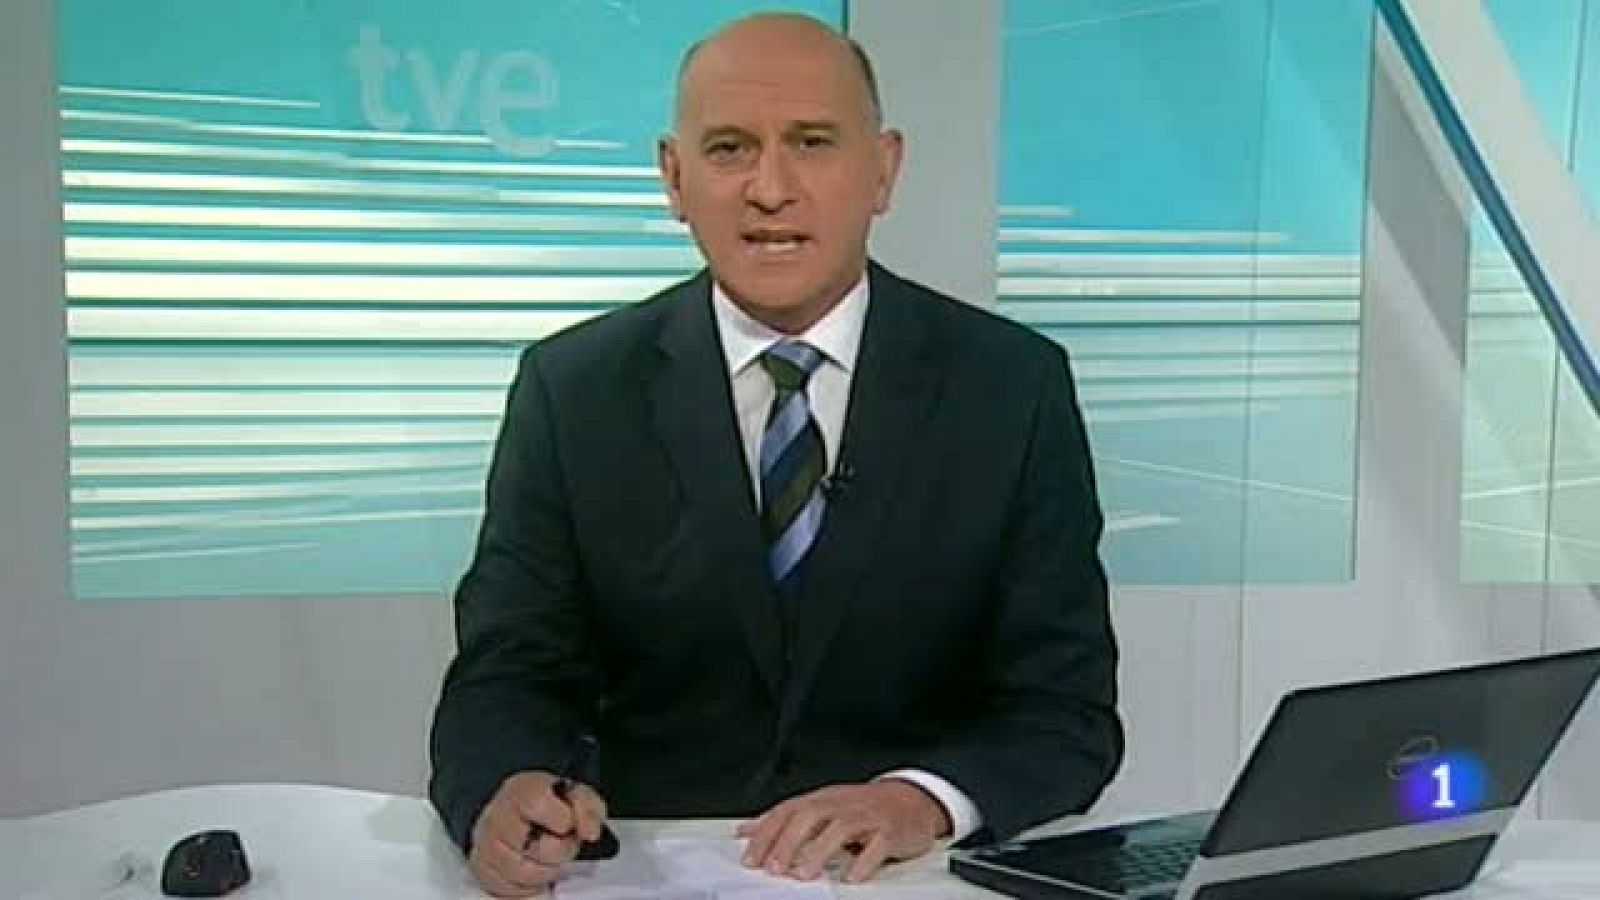 Noticias de Extremadura: Noticias de Extremadura 07/08/2013 | RTVE Play